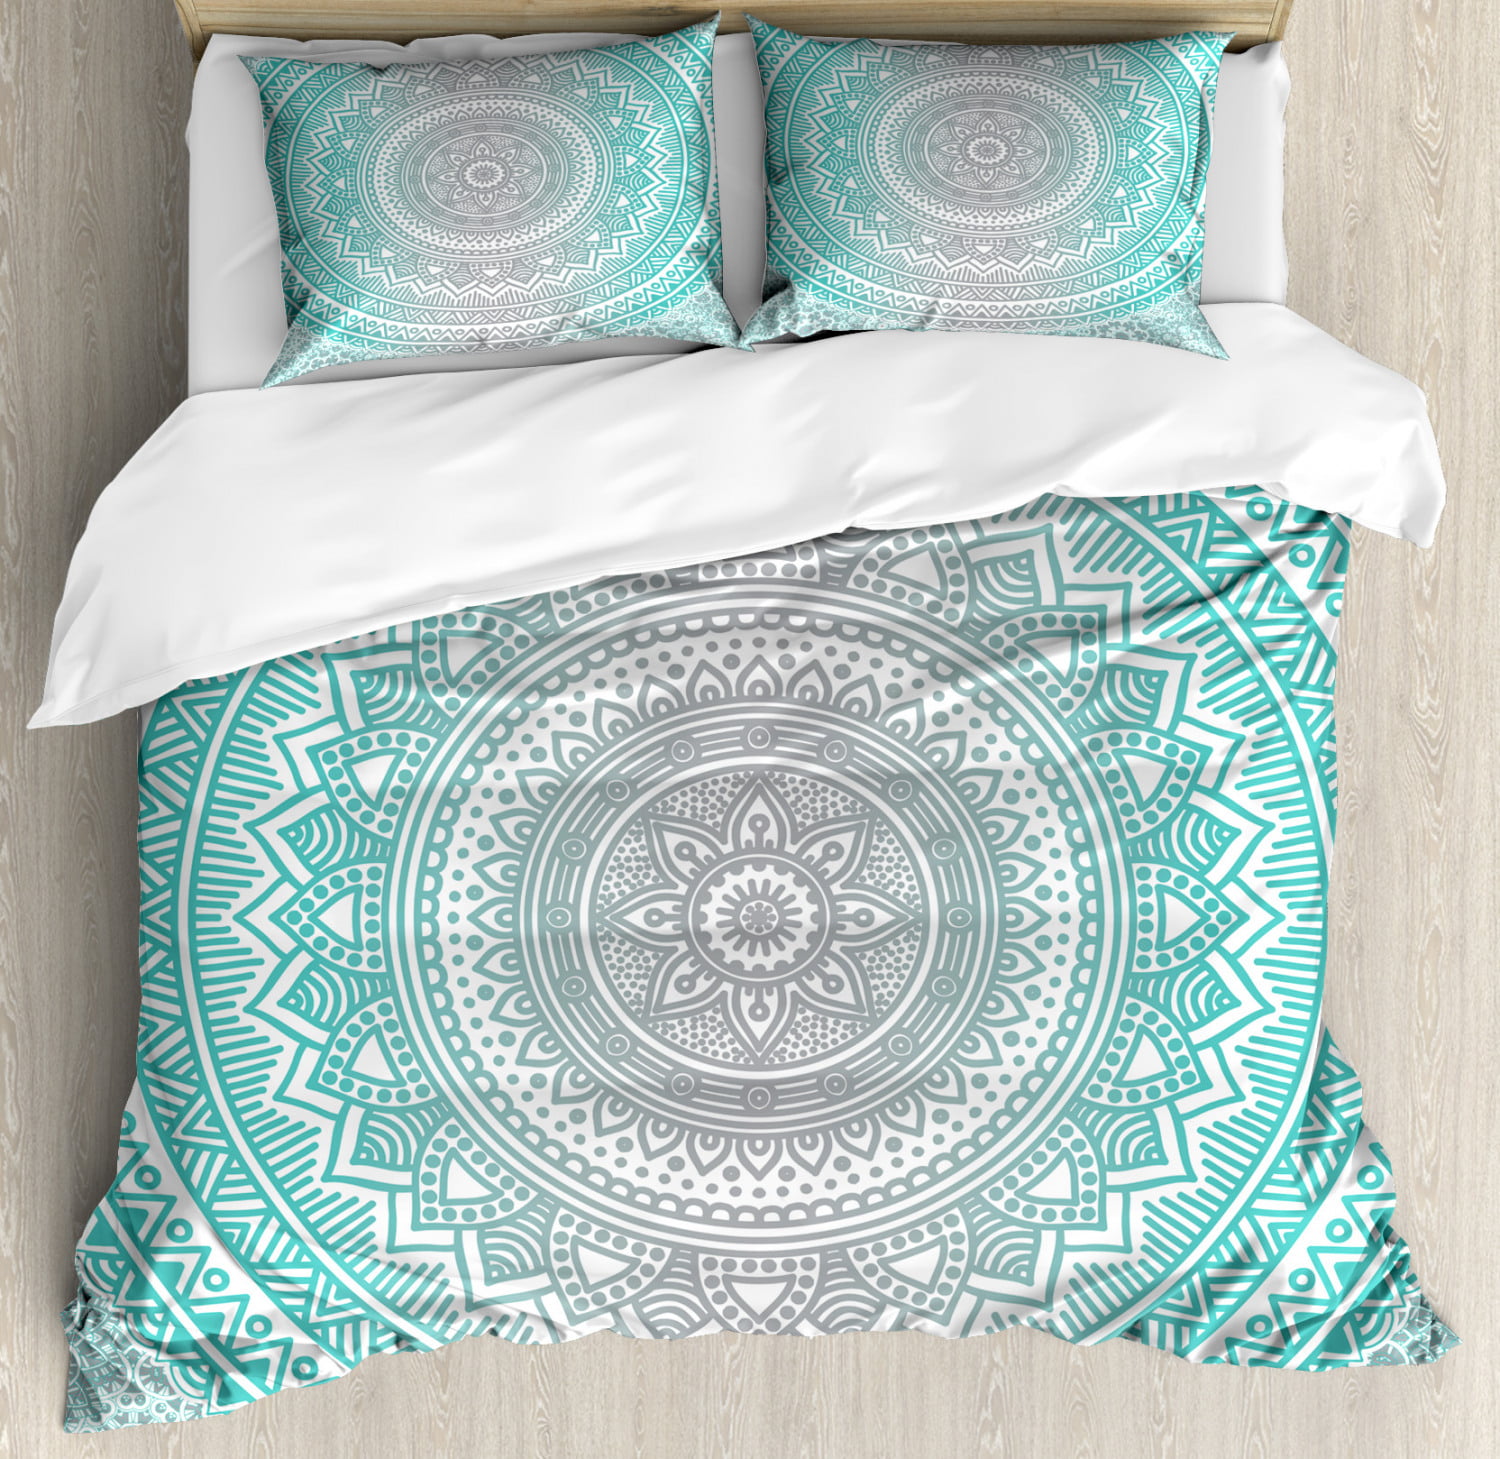 Details about   Mandala Pillow Sham Decorative Pillowcase 3 Sizes Bedroom Decor Ambesonne 